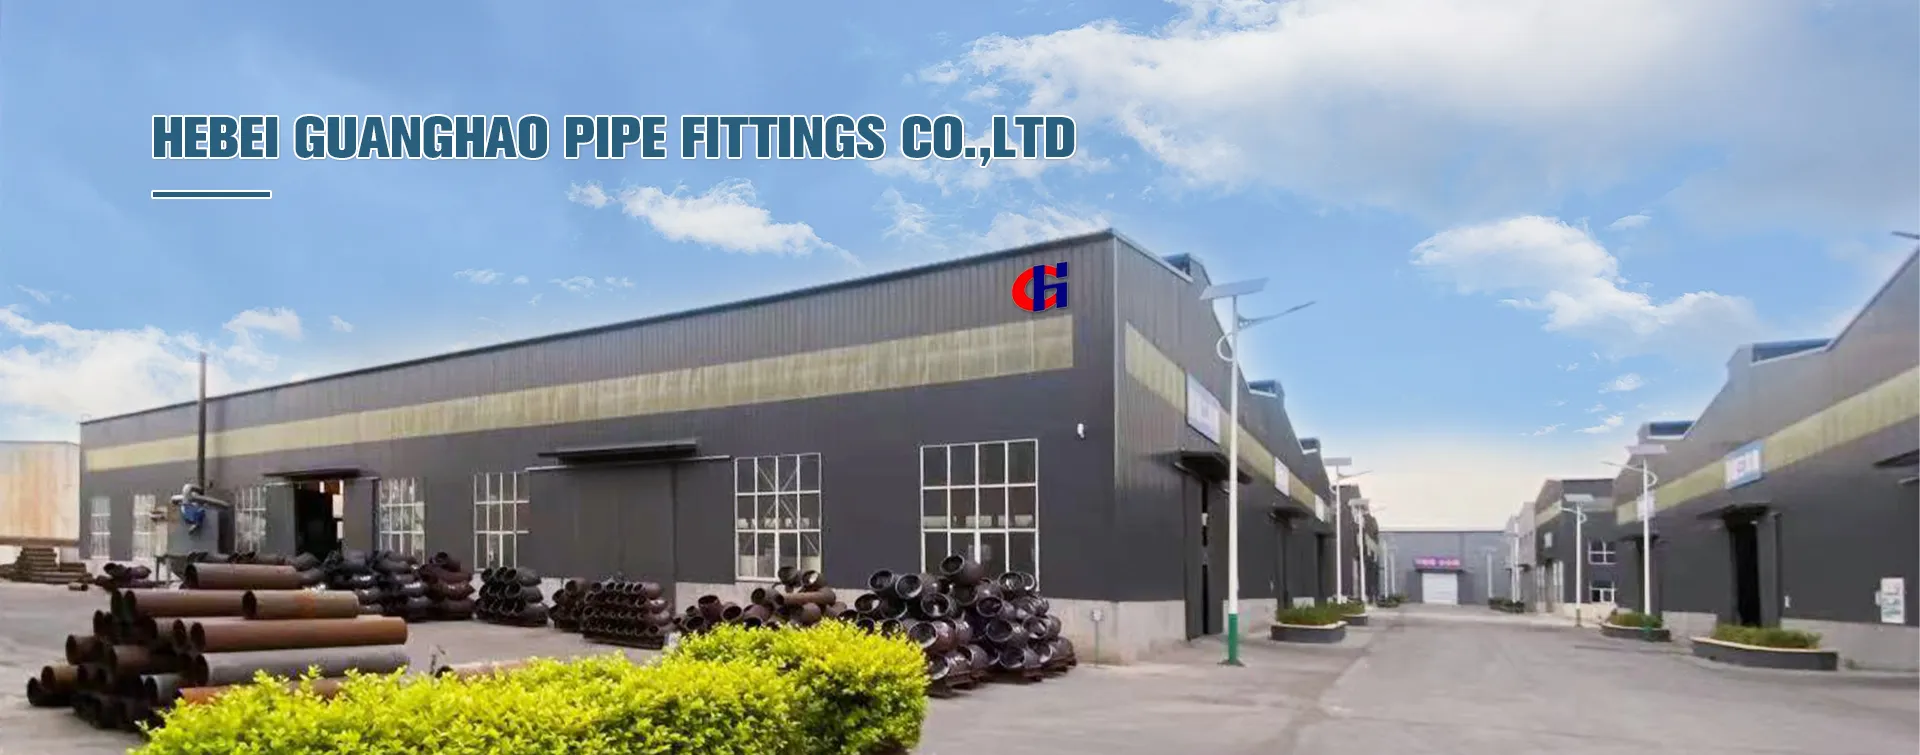 HeBei GuangHao Pipe Fittings Co., Ltd